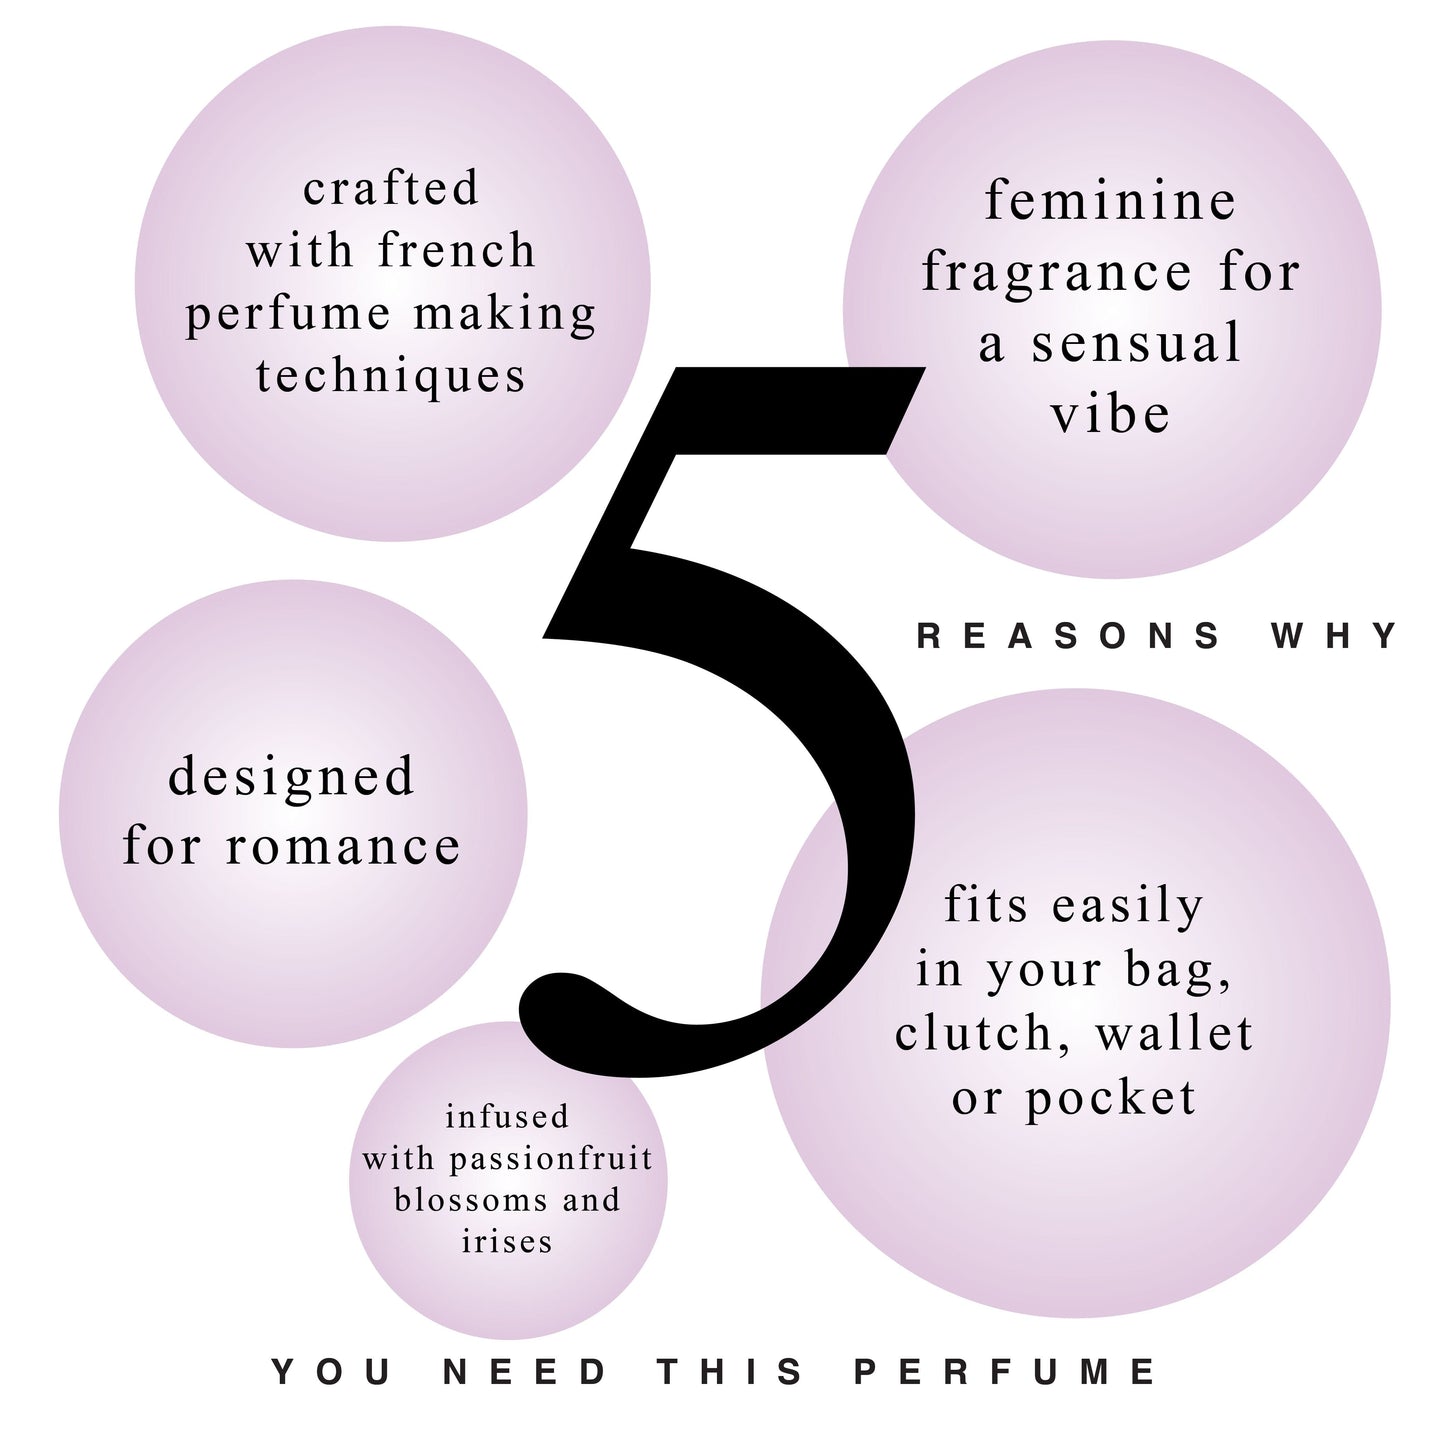 Enchanteur Alluring Pocket Perfume, (Pack of 3)